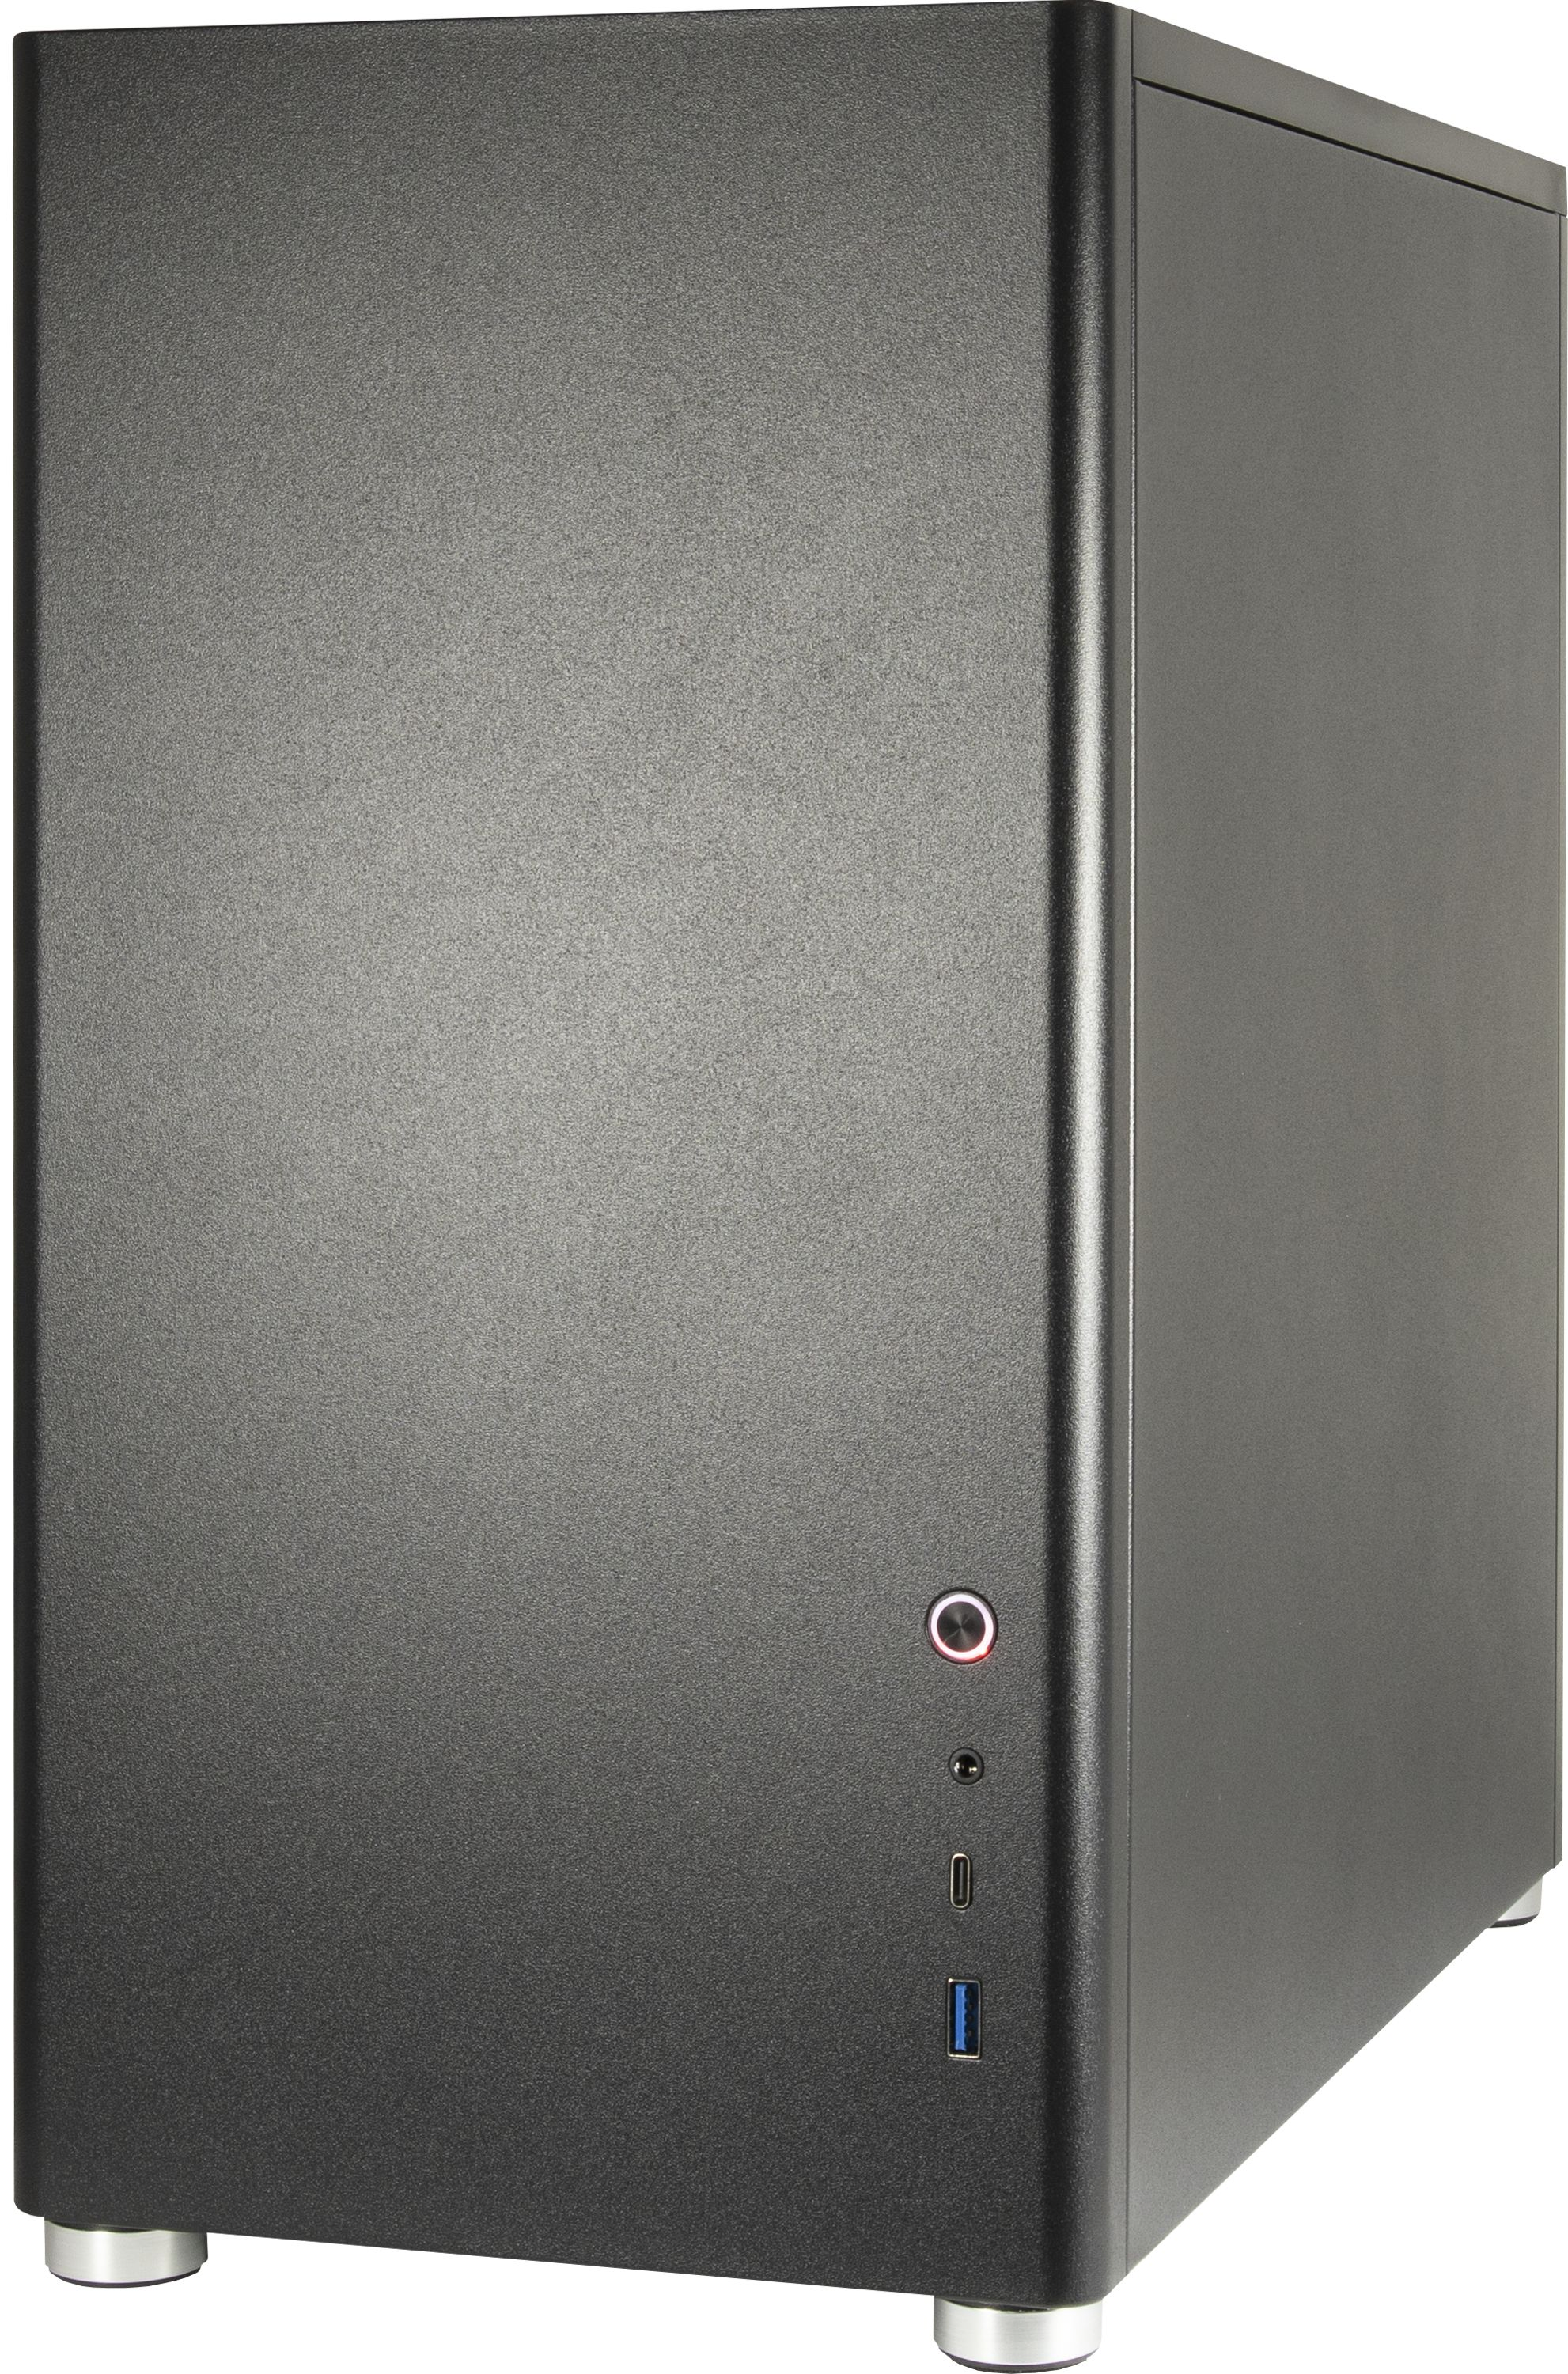 Cases, Schwarz X2 INTER-TECH PC Duplex Pro